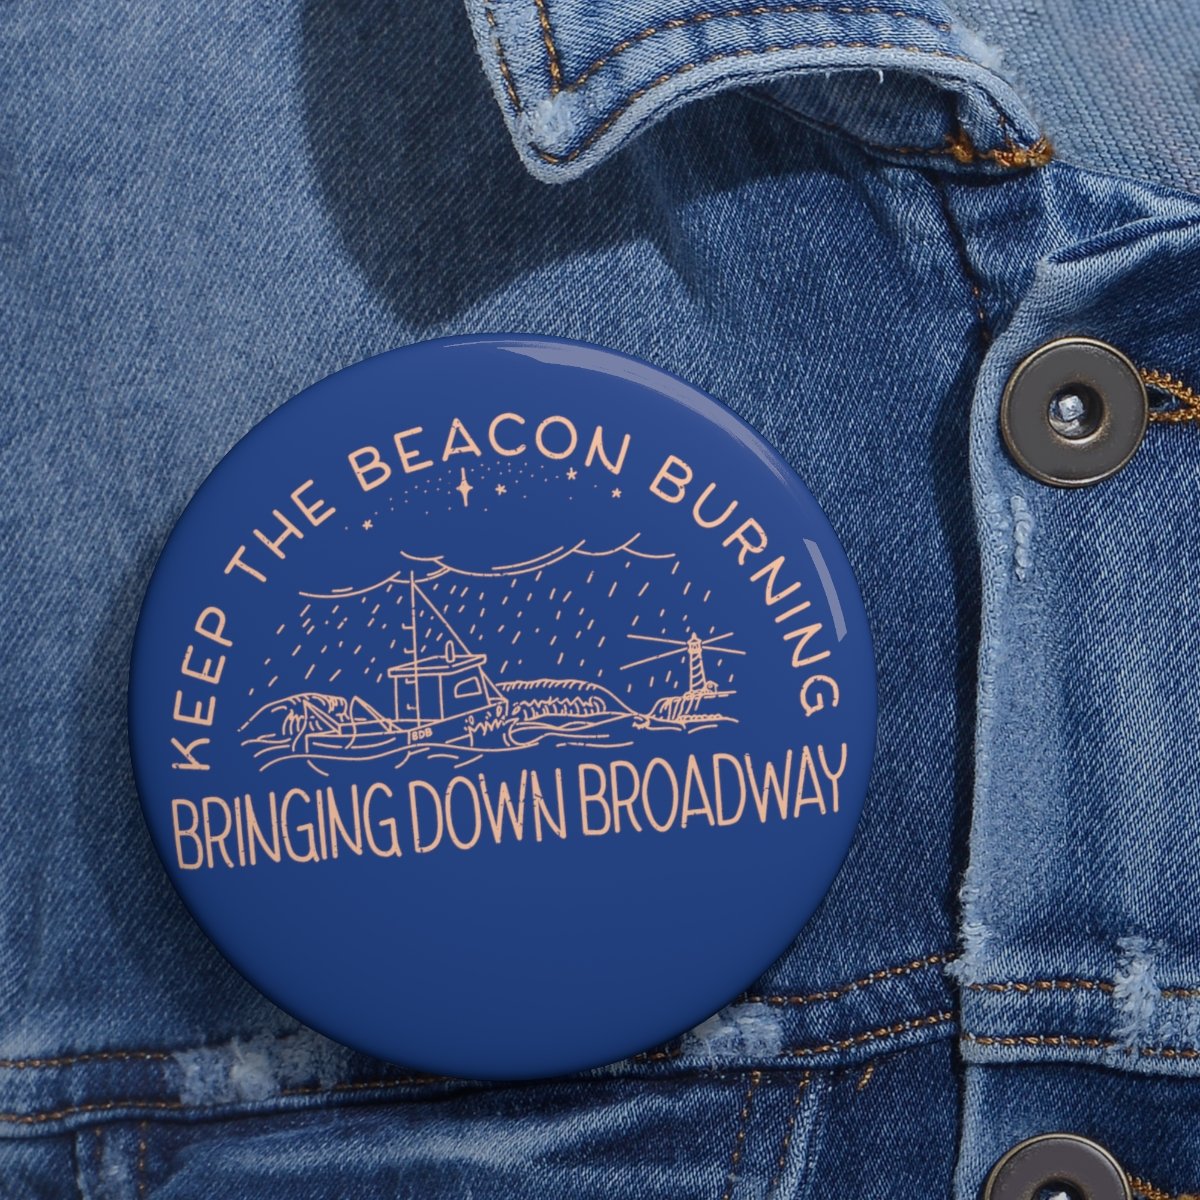 Bringing Down Broadway – Beacon Pin Buttons (Royal Blue)